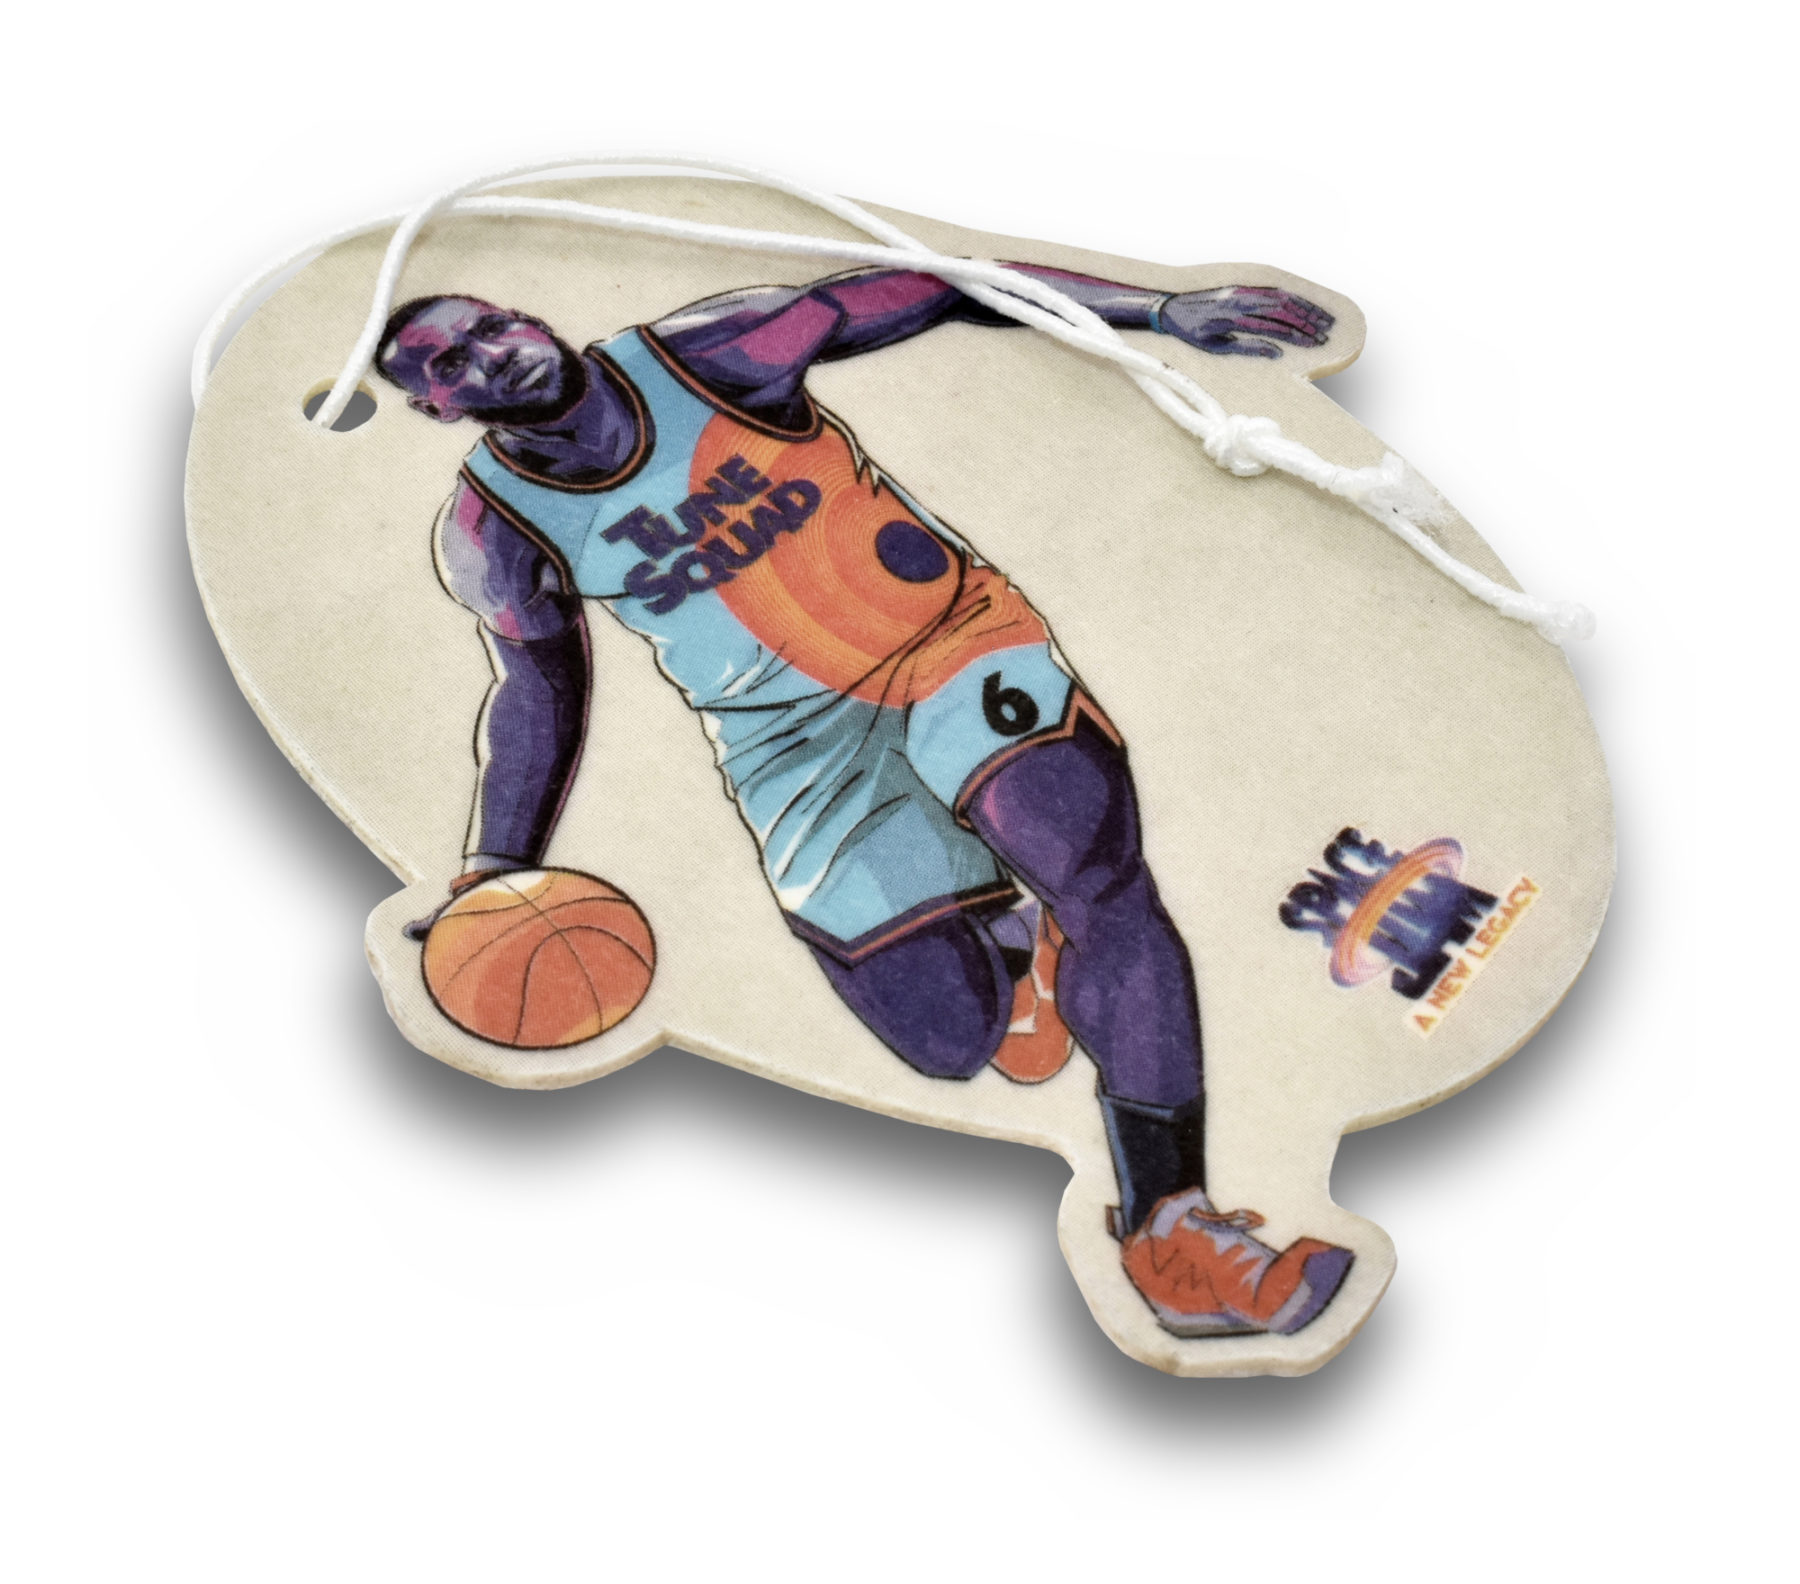 Lebron James NBA Lakers Purple Jersey Car Air Freshener 